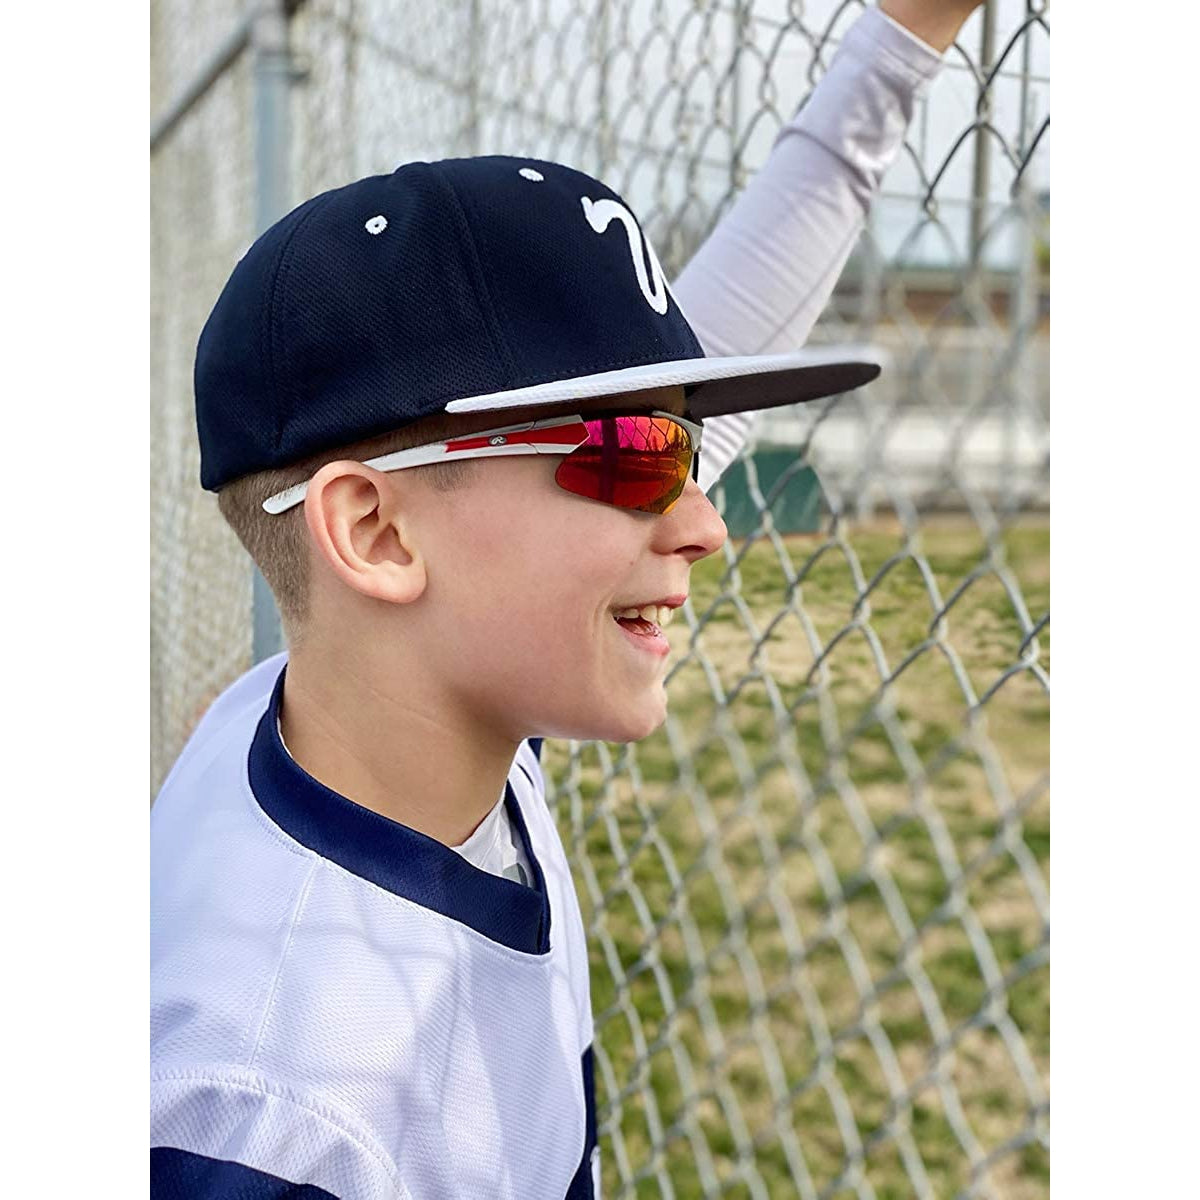 RAWLINGS Youth Sports Baseball Sunglasses Durable 100% UV Poly Lens,  Shielded Lens (White/Red)